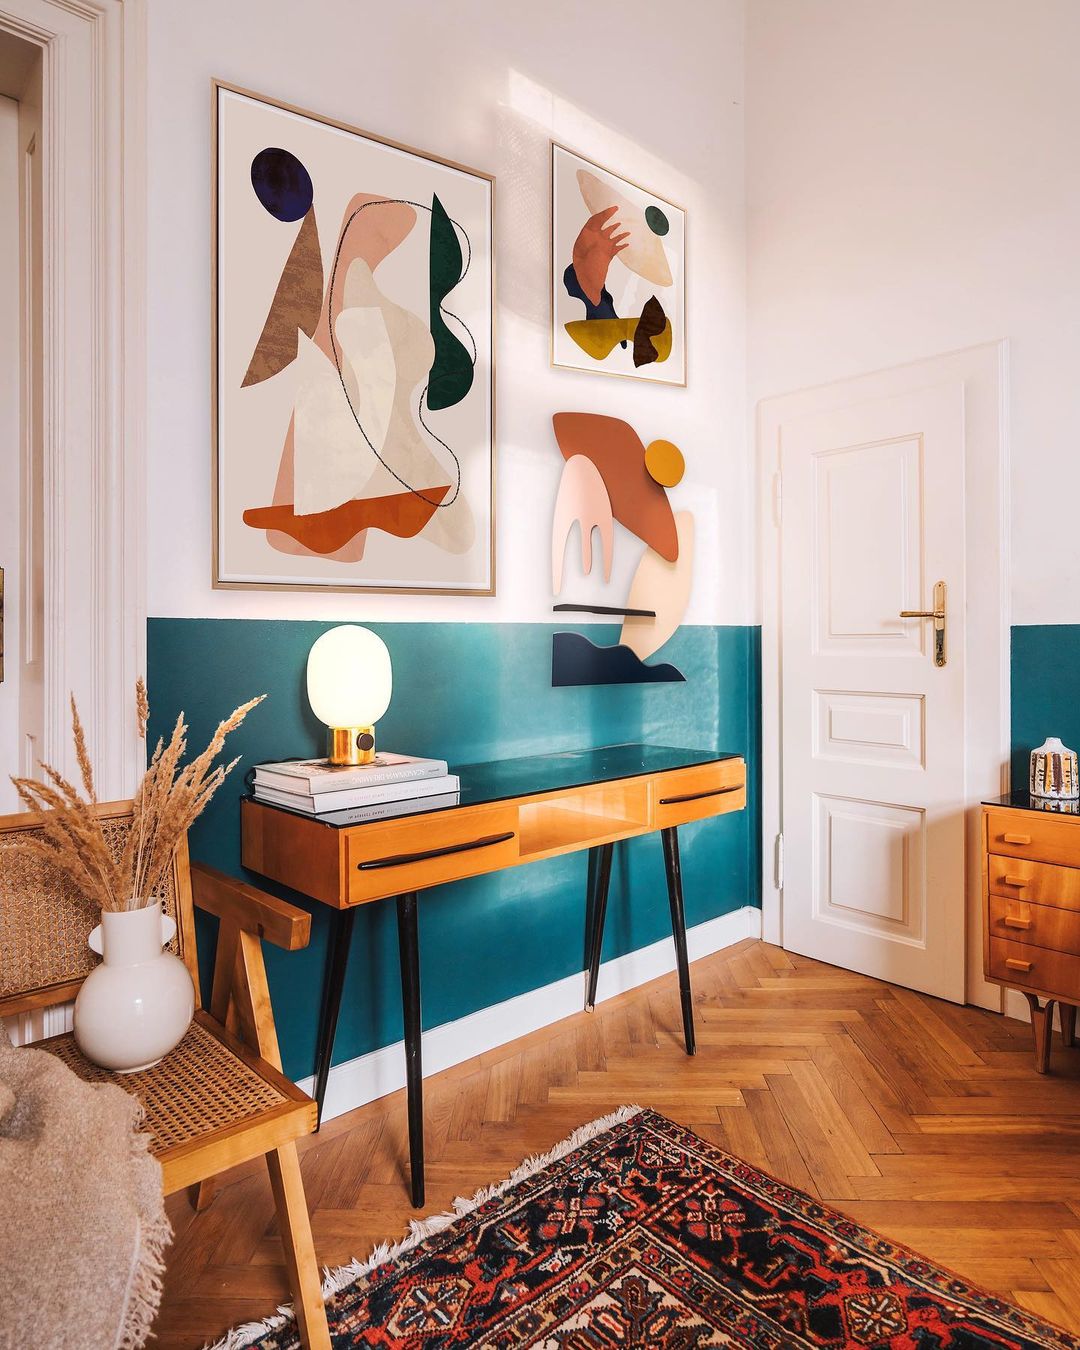 Modern Home Office with Elevated Furniture. Photo by Instagram user @janskacelikart